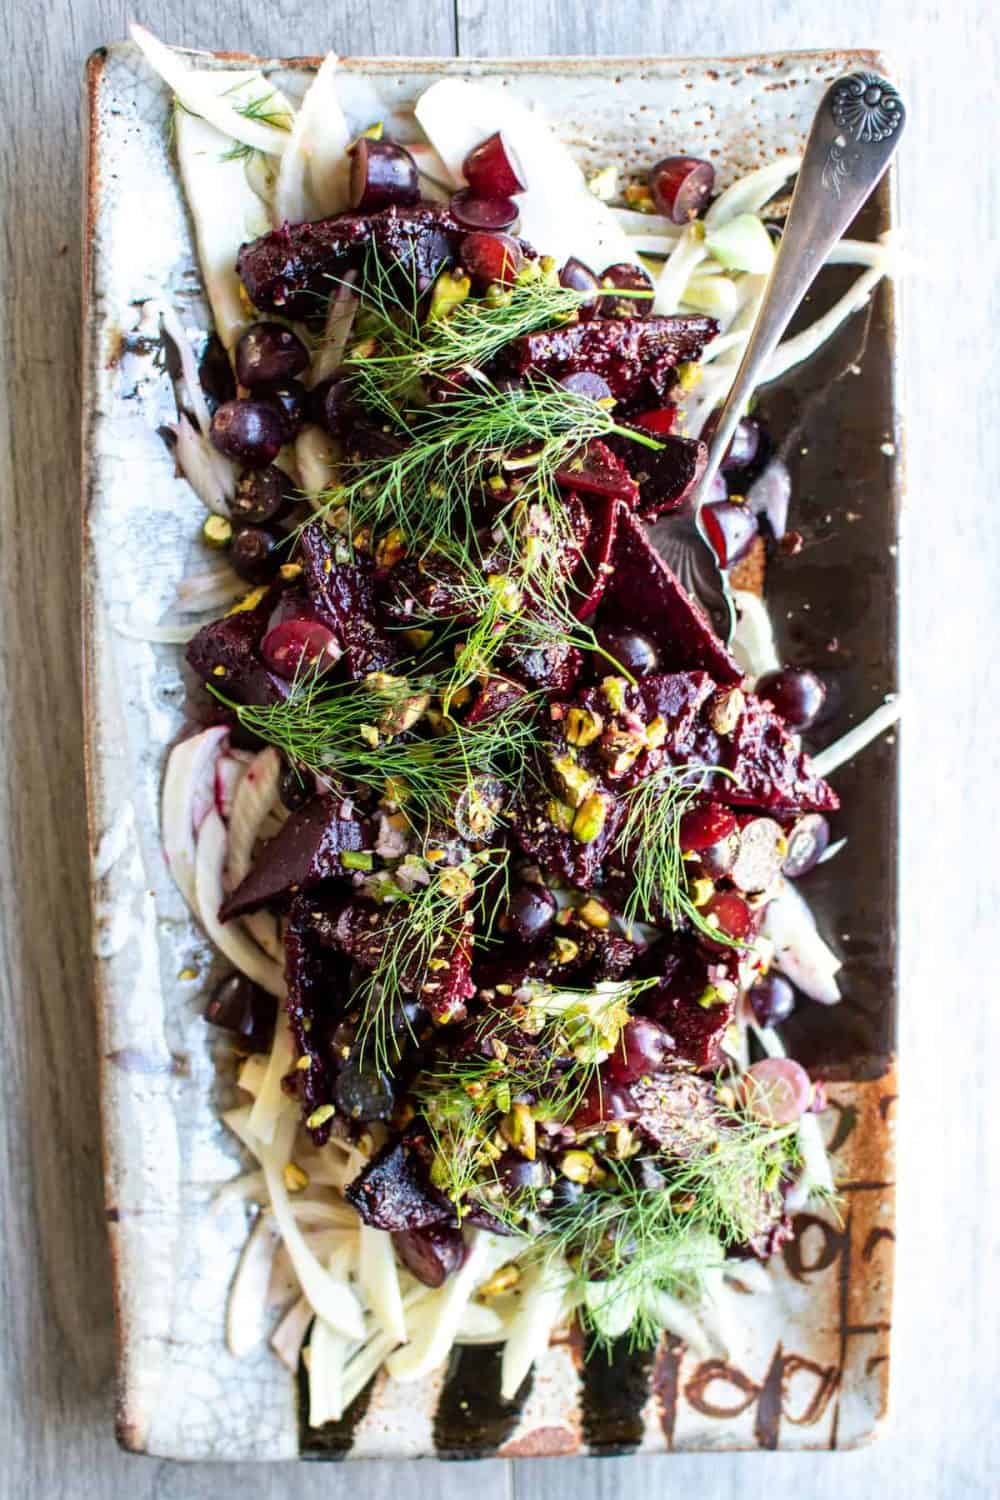 Grape-Roasted Beet Salad with Serrano Pepper Dressing